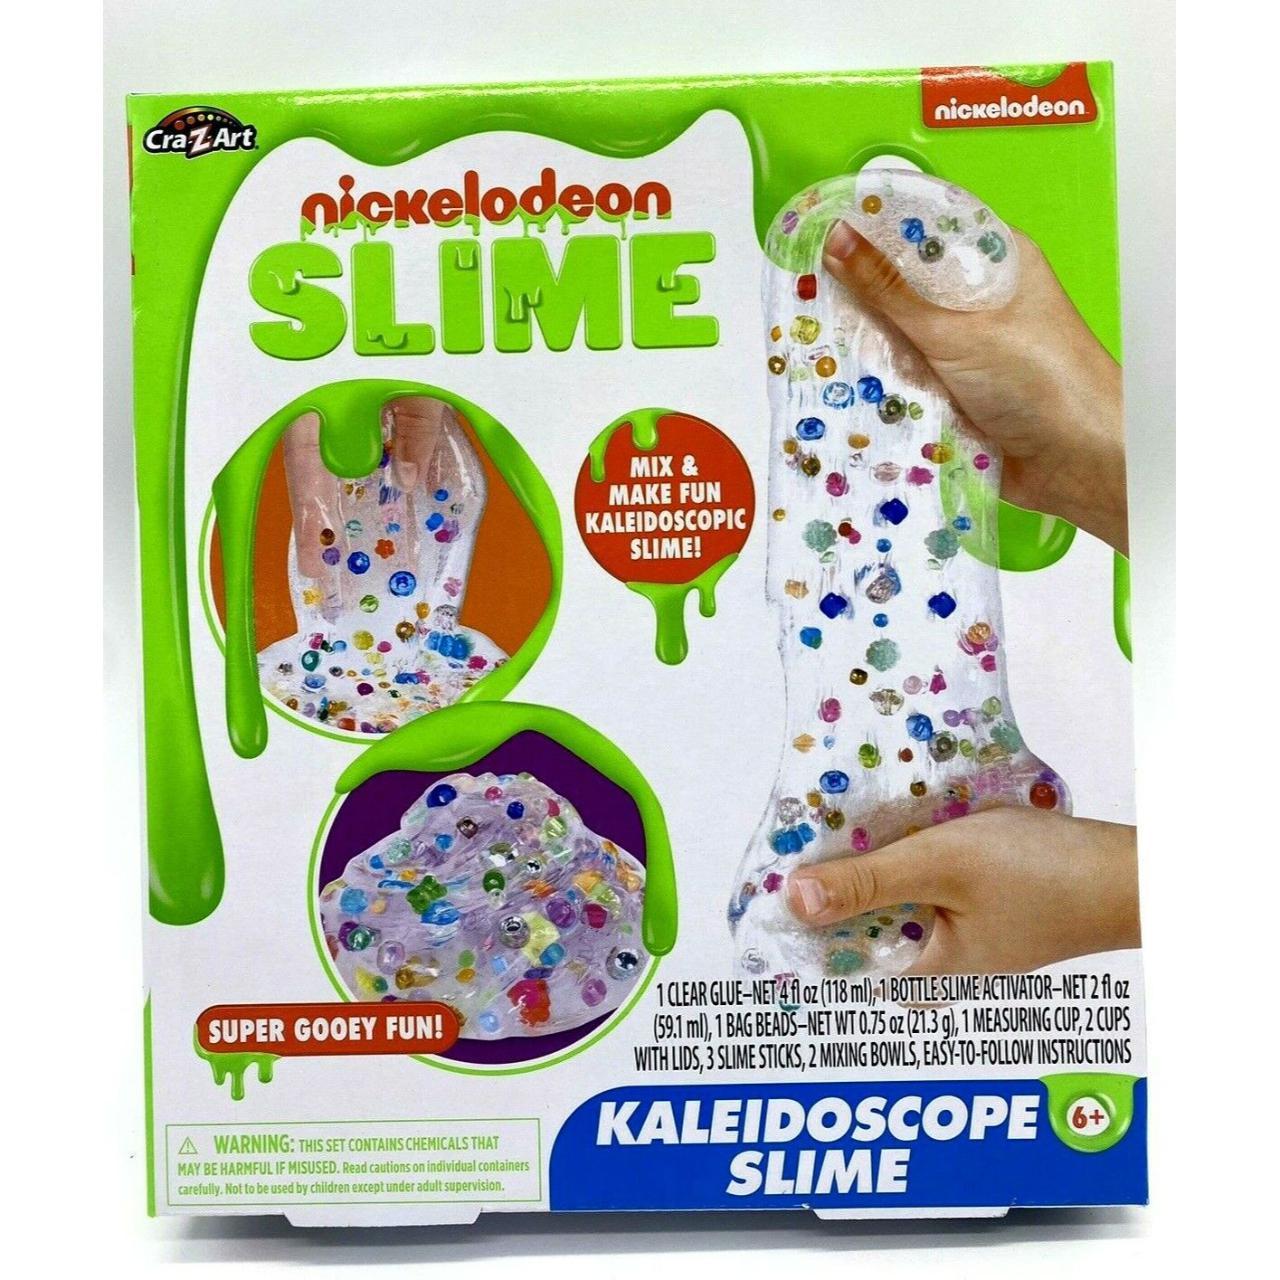 Nickelodeon Slime Kit - Fun Food Jars, sold individually